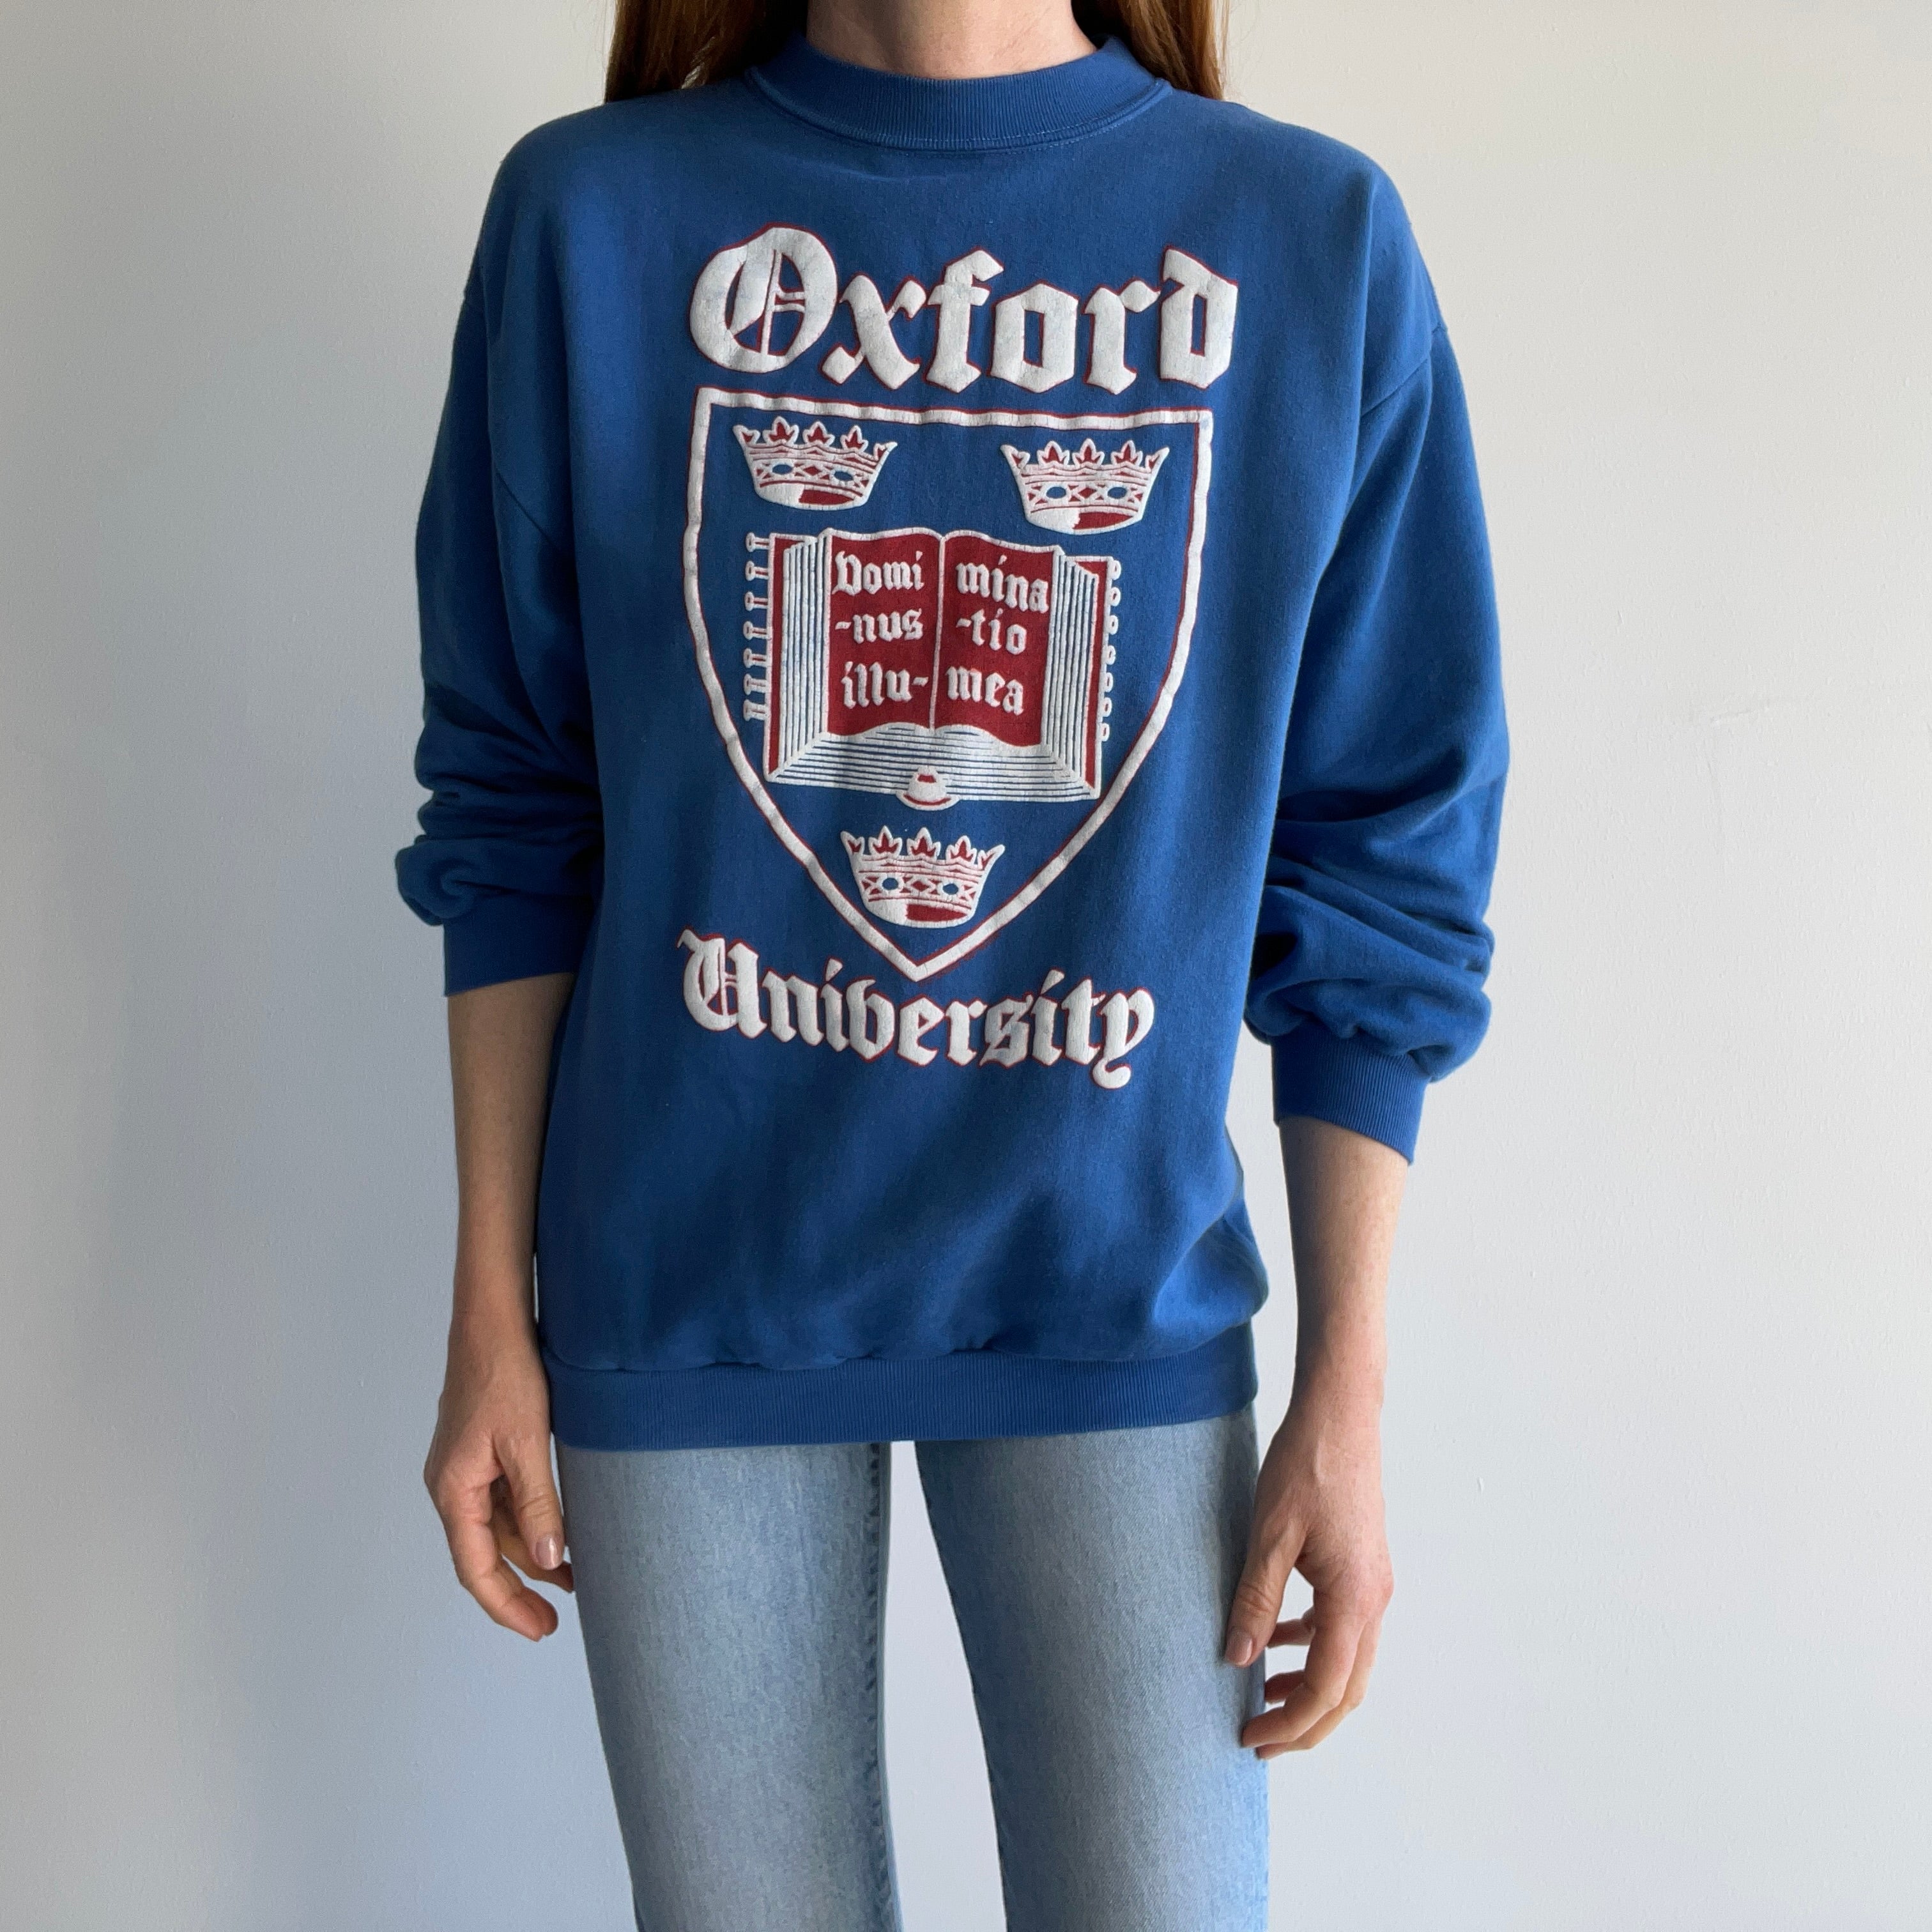 1980/90s Oxford, London Epic Sweatshirt !!!!